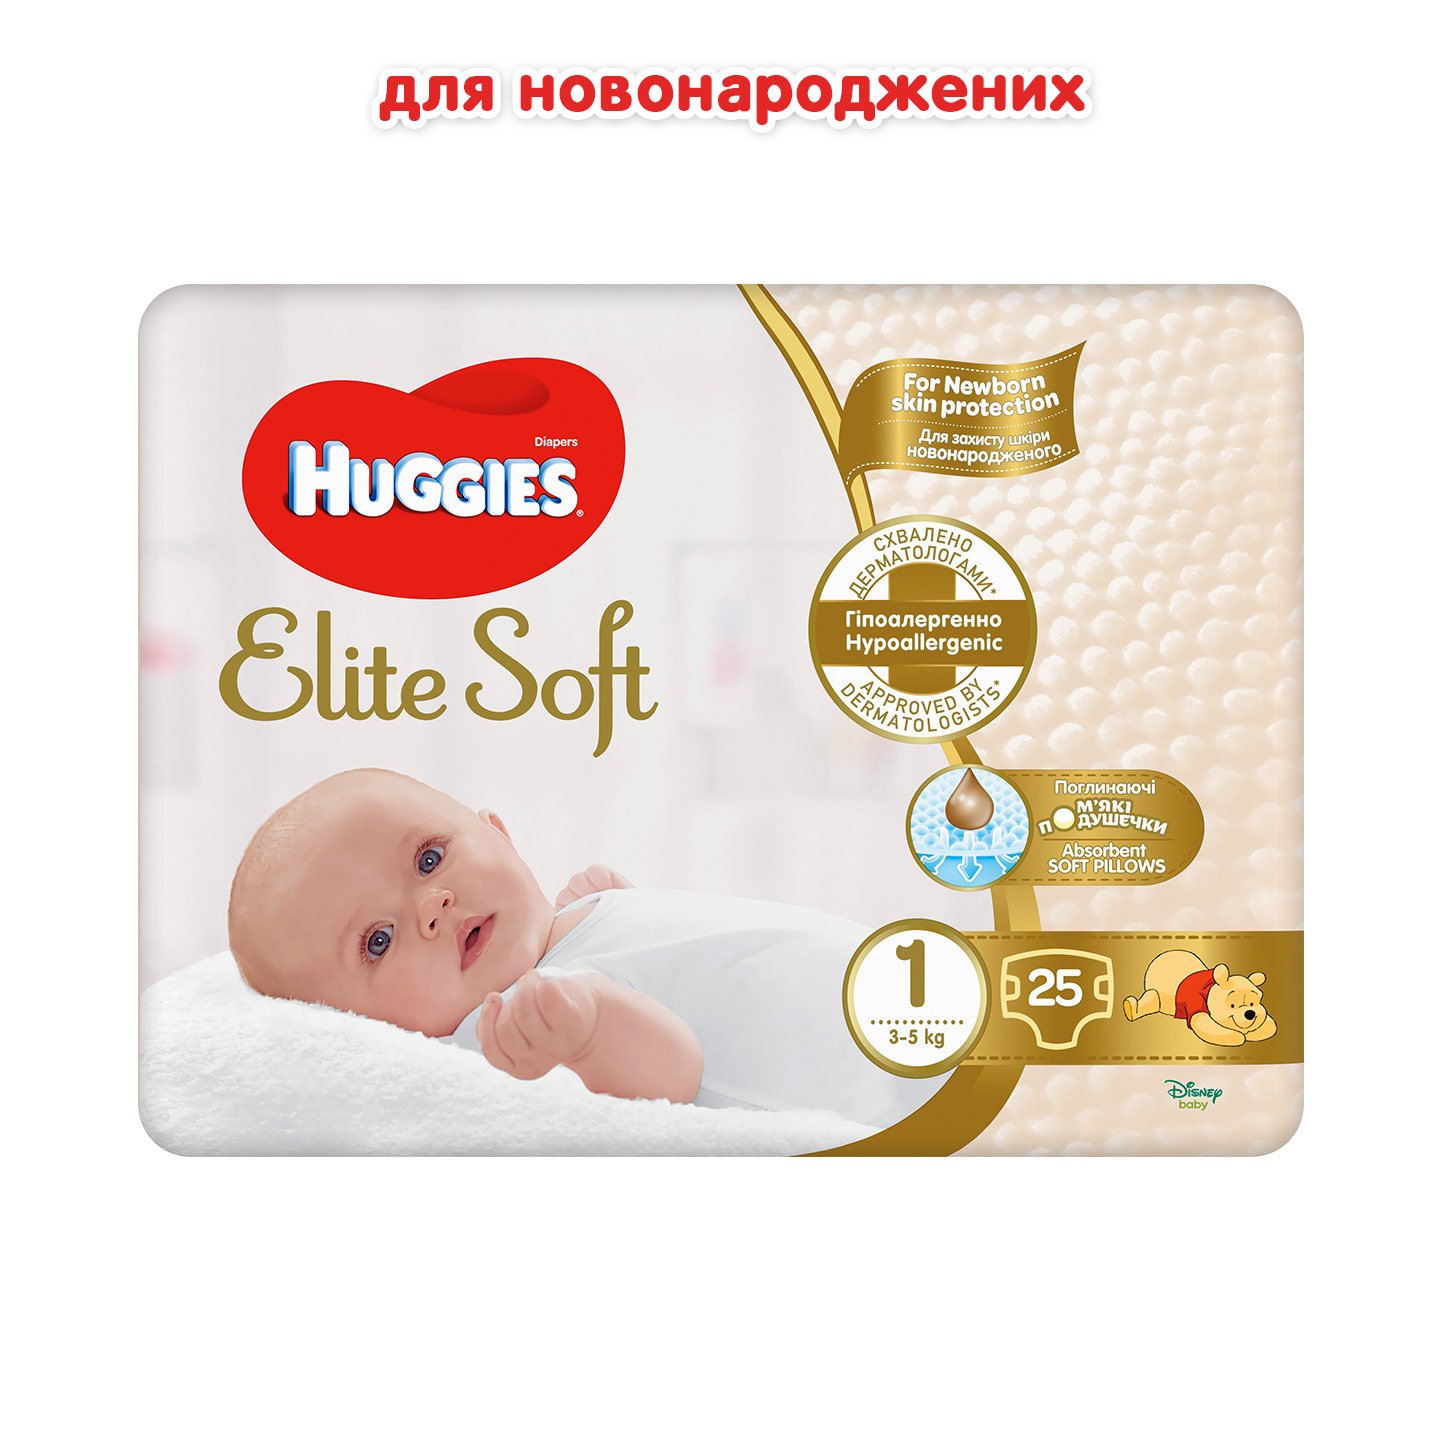 Підгузки Huggies Elite Soft 1 (3-5кг), 25 шт. - фото 2